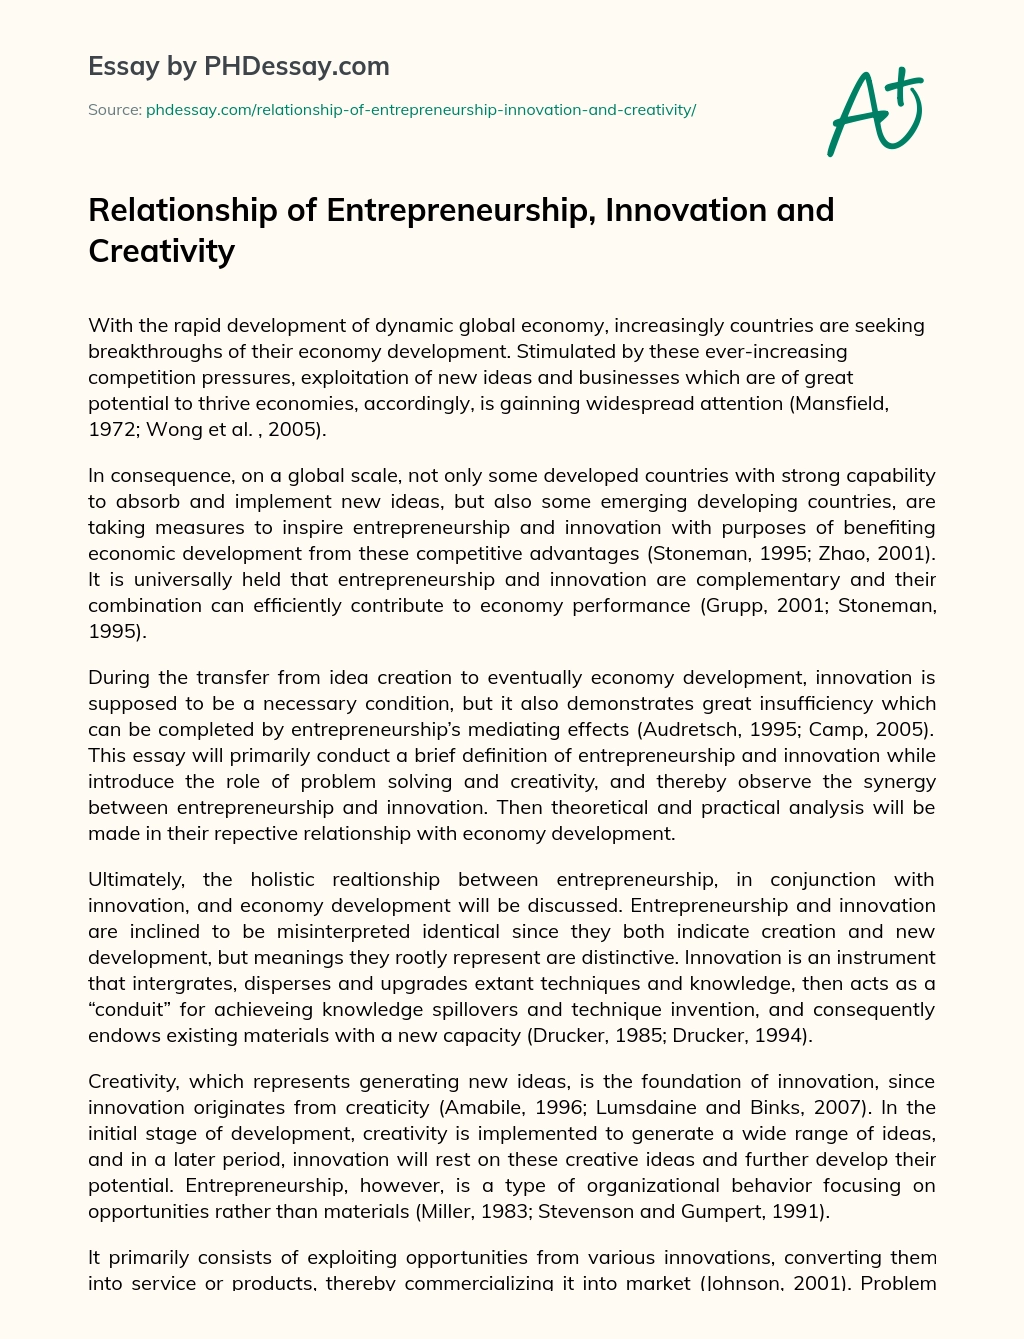 Relationship of Entrepreneurship, Innovation and Creativity essay